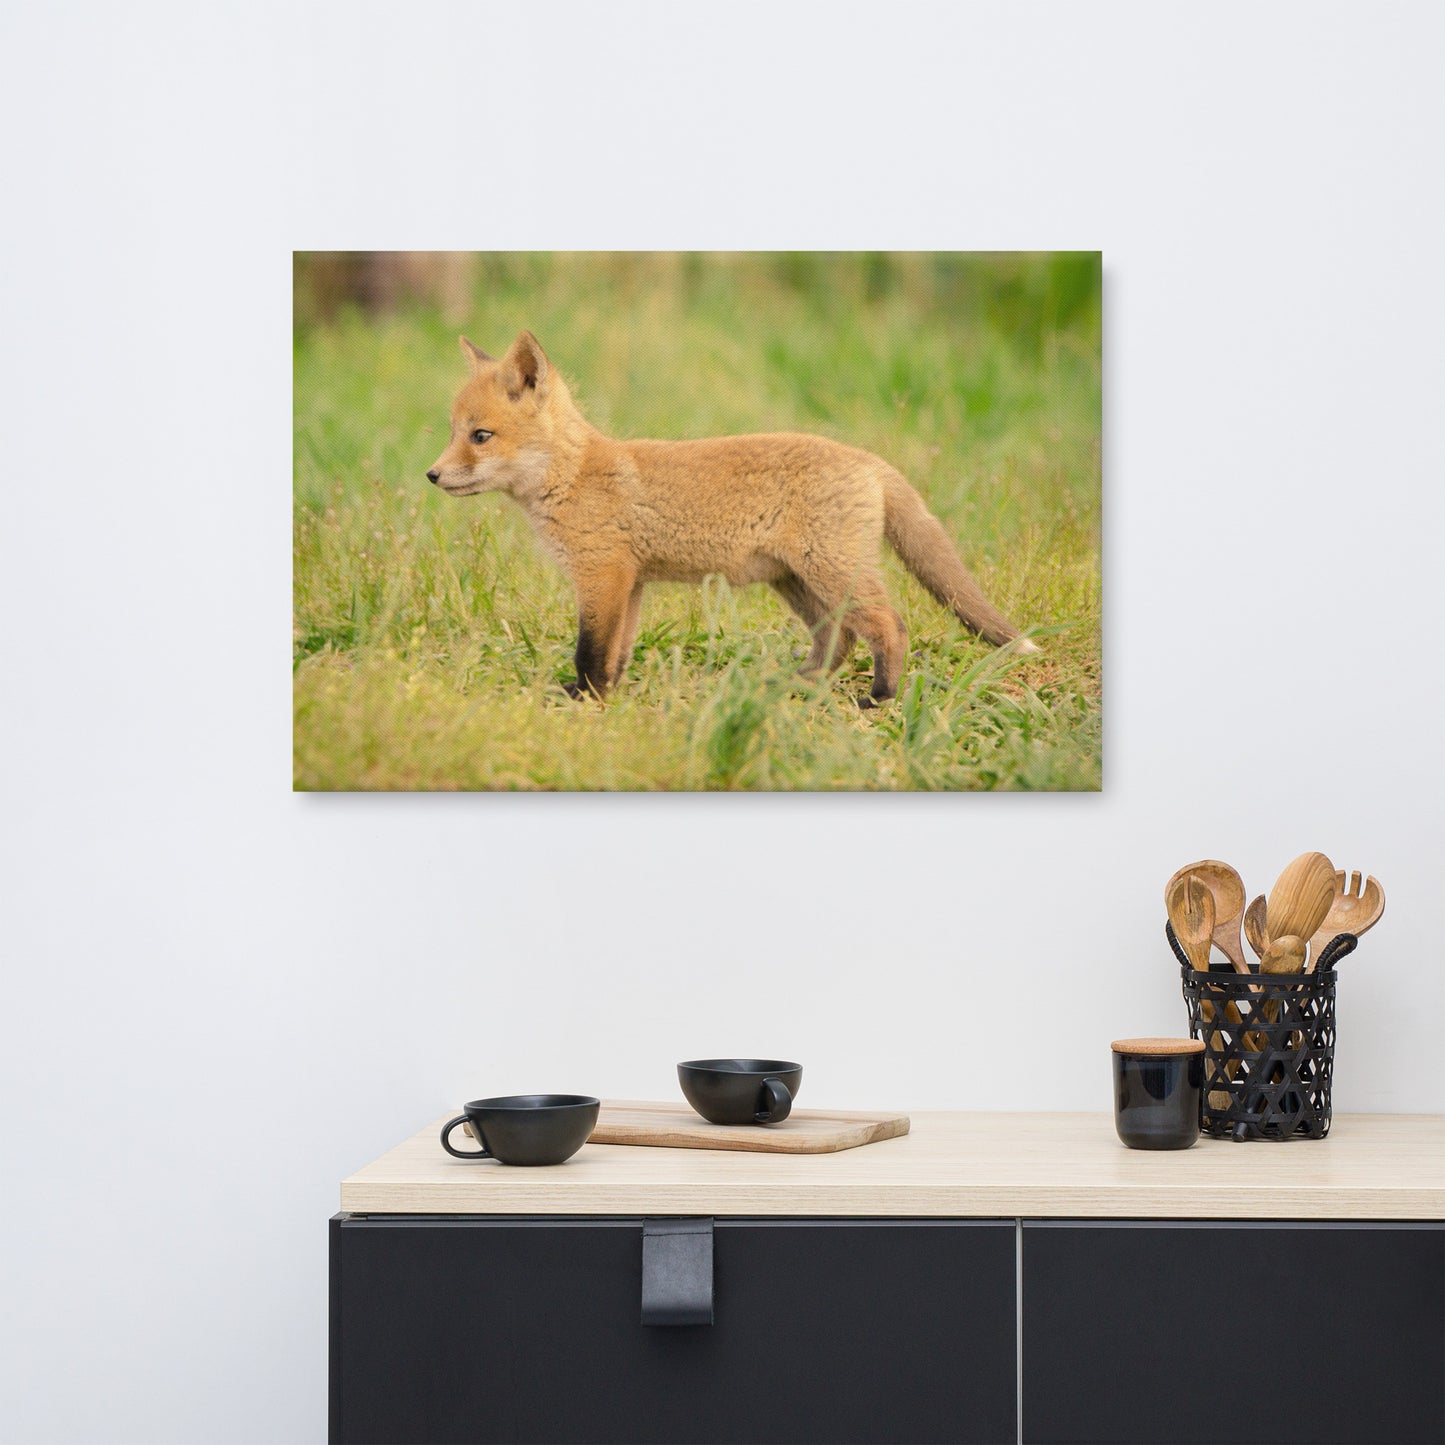 Simple Nursery Art: Fox Pup In Meadow - Wildlife / Animal / Nature Photograph Canvas Wall Art Print - Artwork - Wall Decor